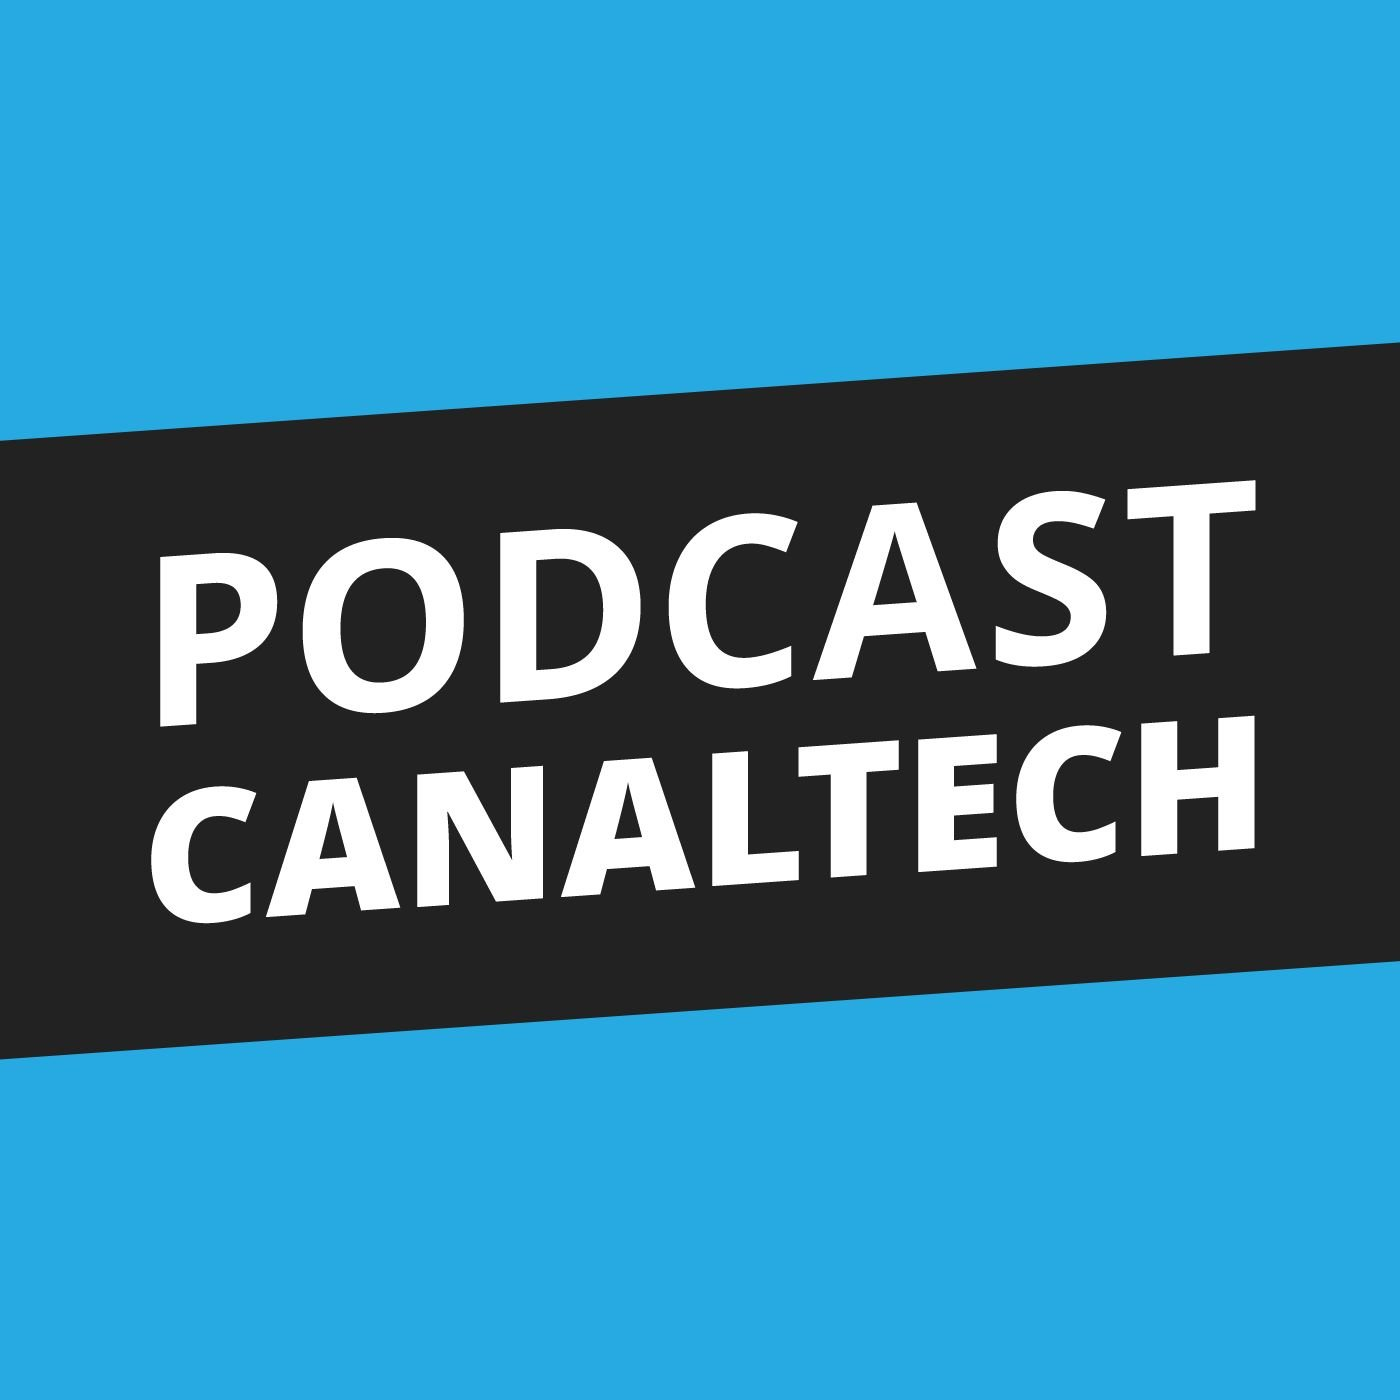 Podcast Canaltech - 21/11/13